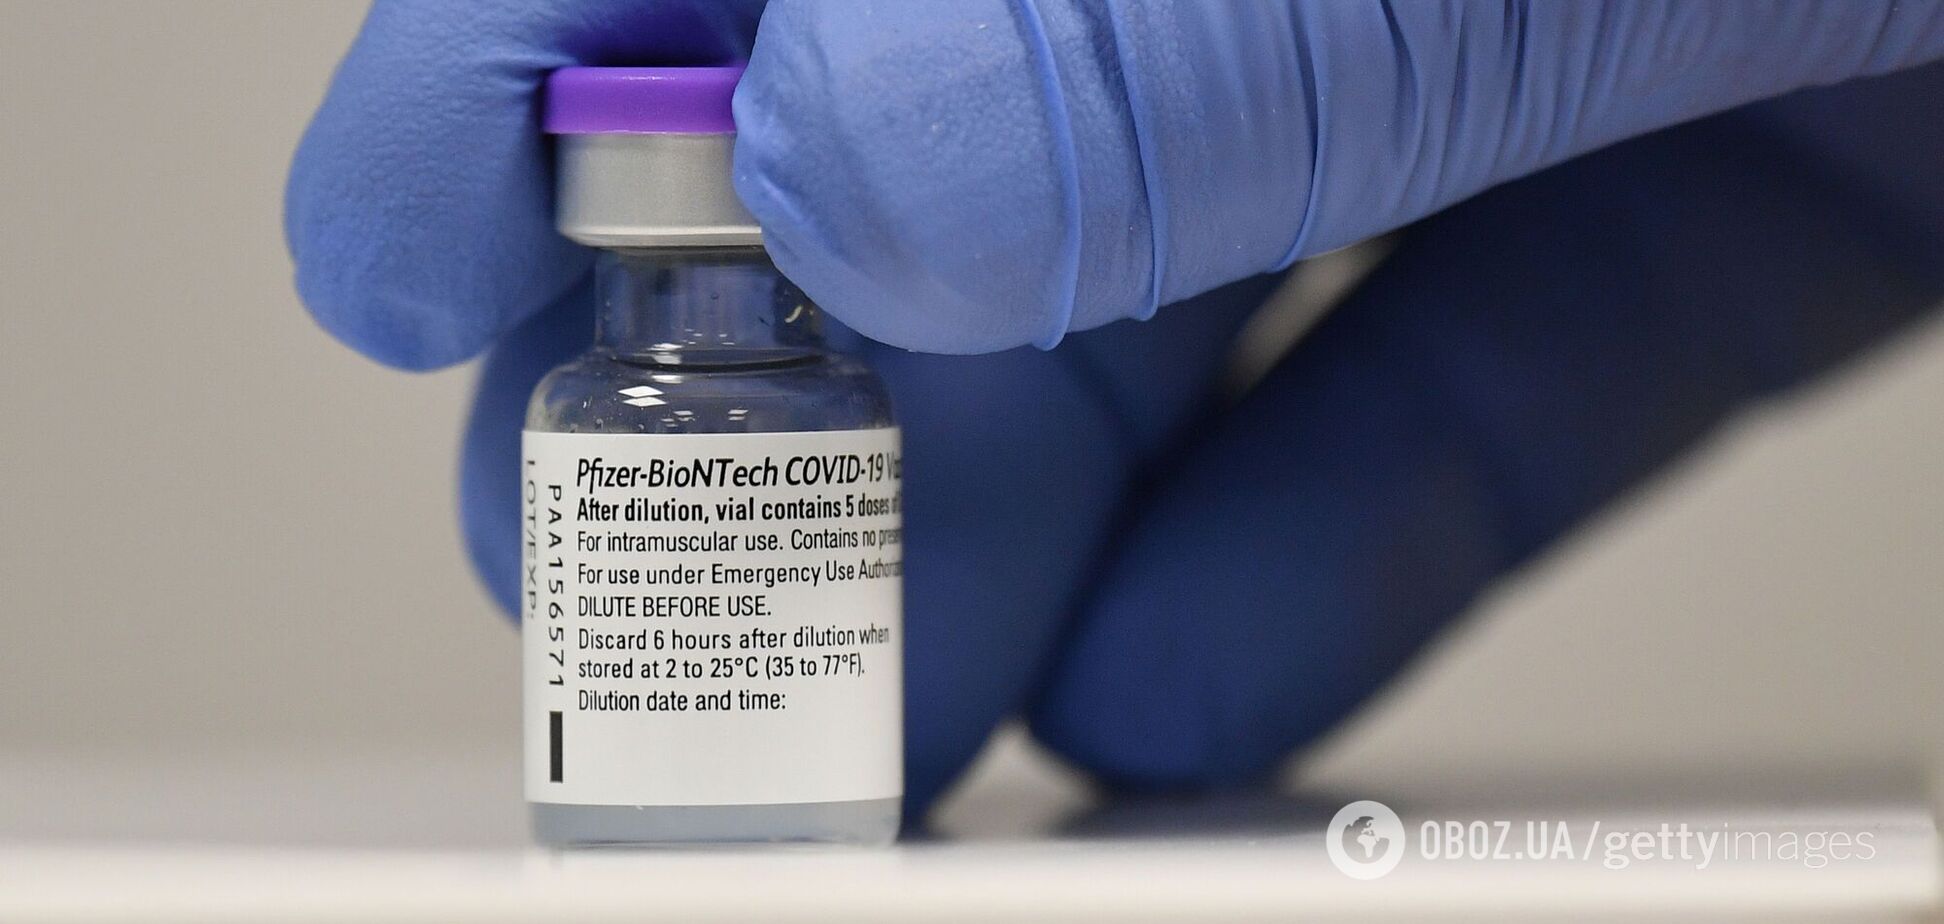 Вакцина Pfizer показала 100% выработку антител против COVID-19 – врачи в Италии